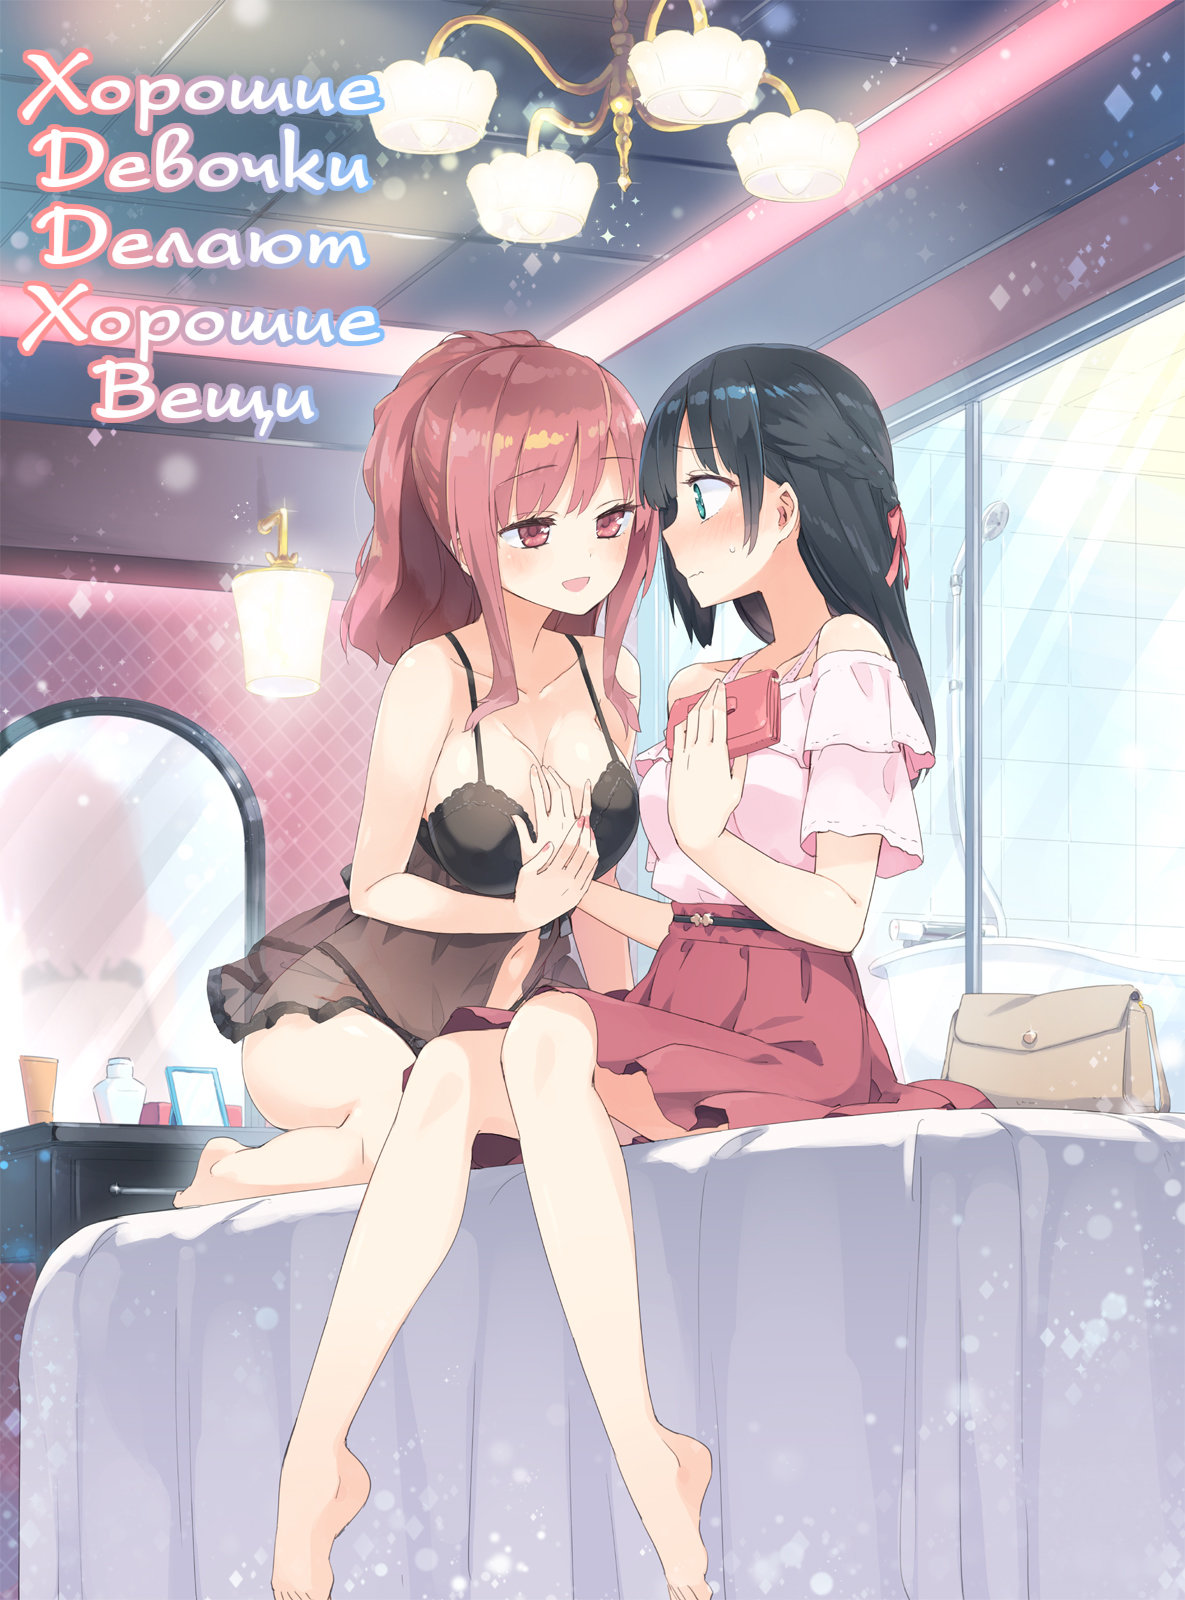 Читаем Порно манга Хорошие девочки делают хорошие вещи - Iiko + Iikoto -  Iiko + Iikoto онлайн на русском. Глава 1 - AllHentai